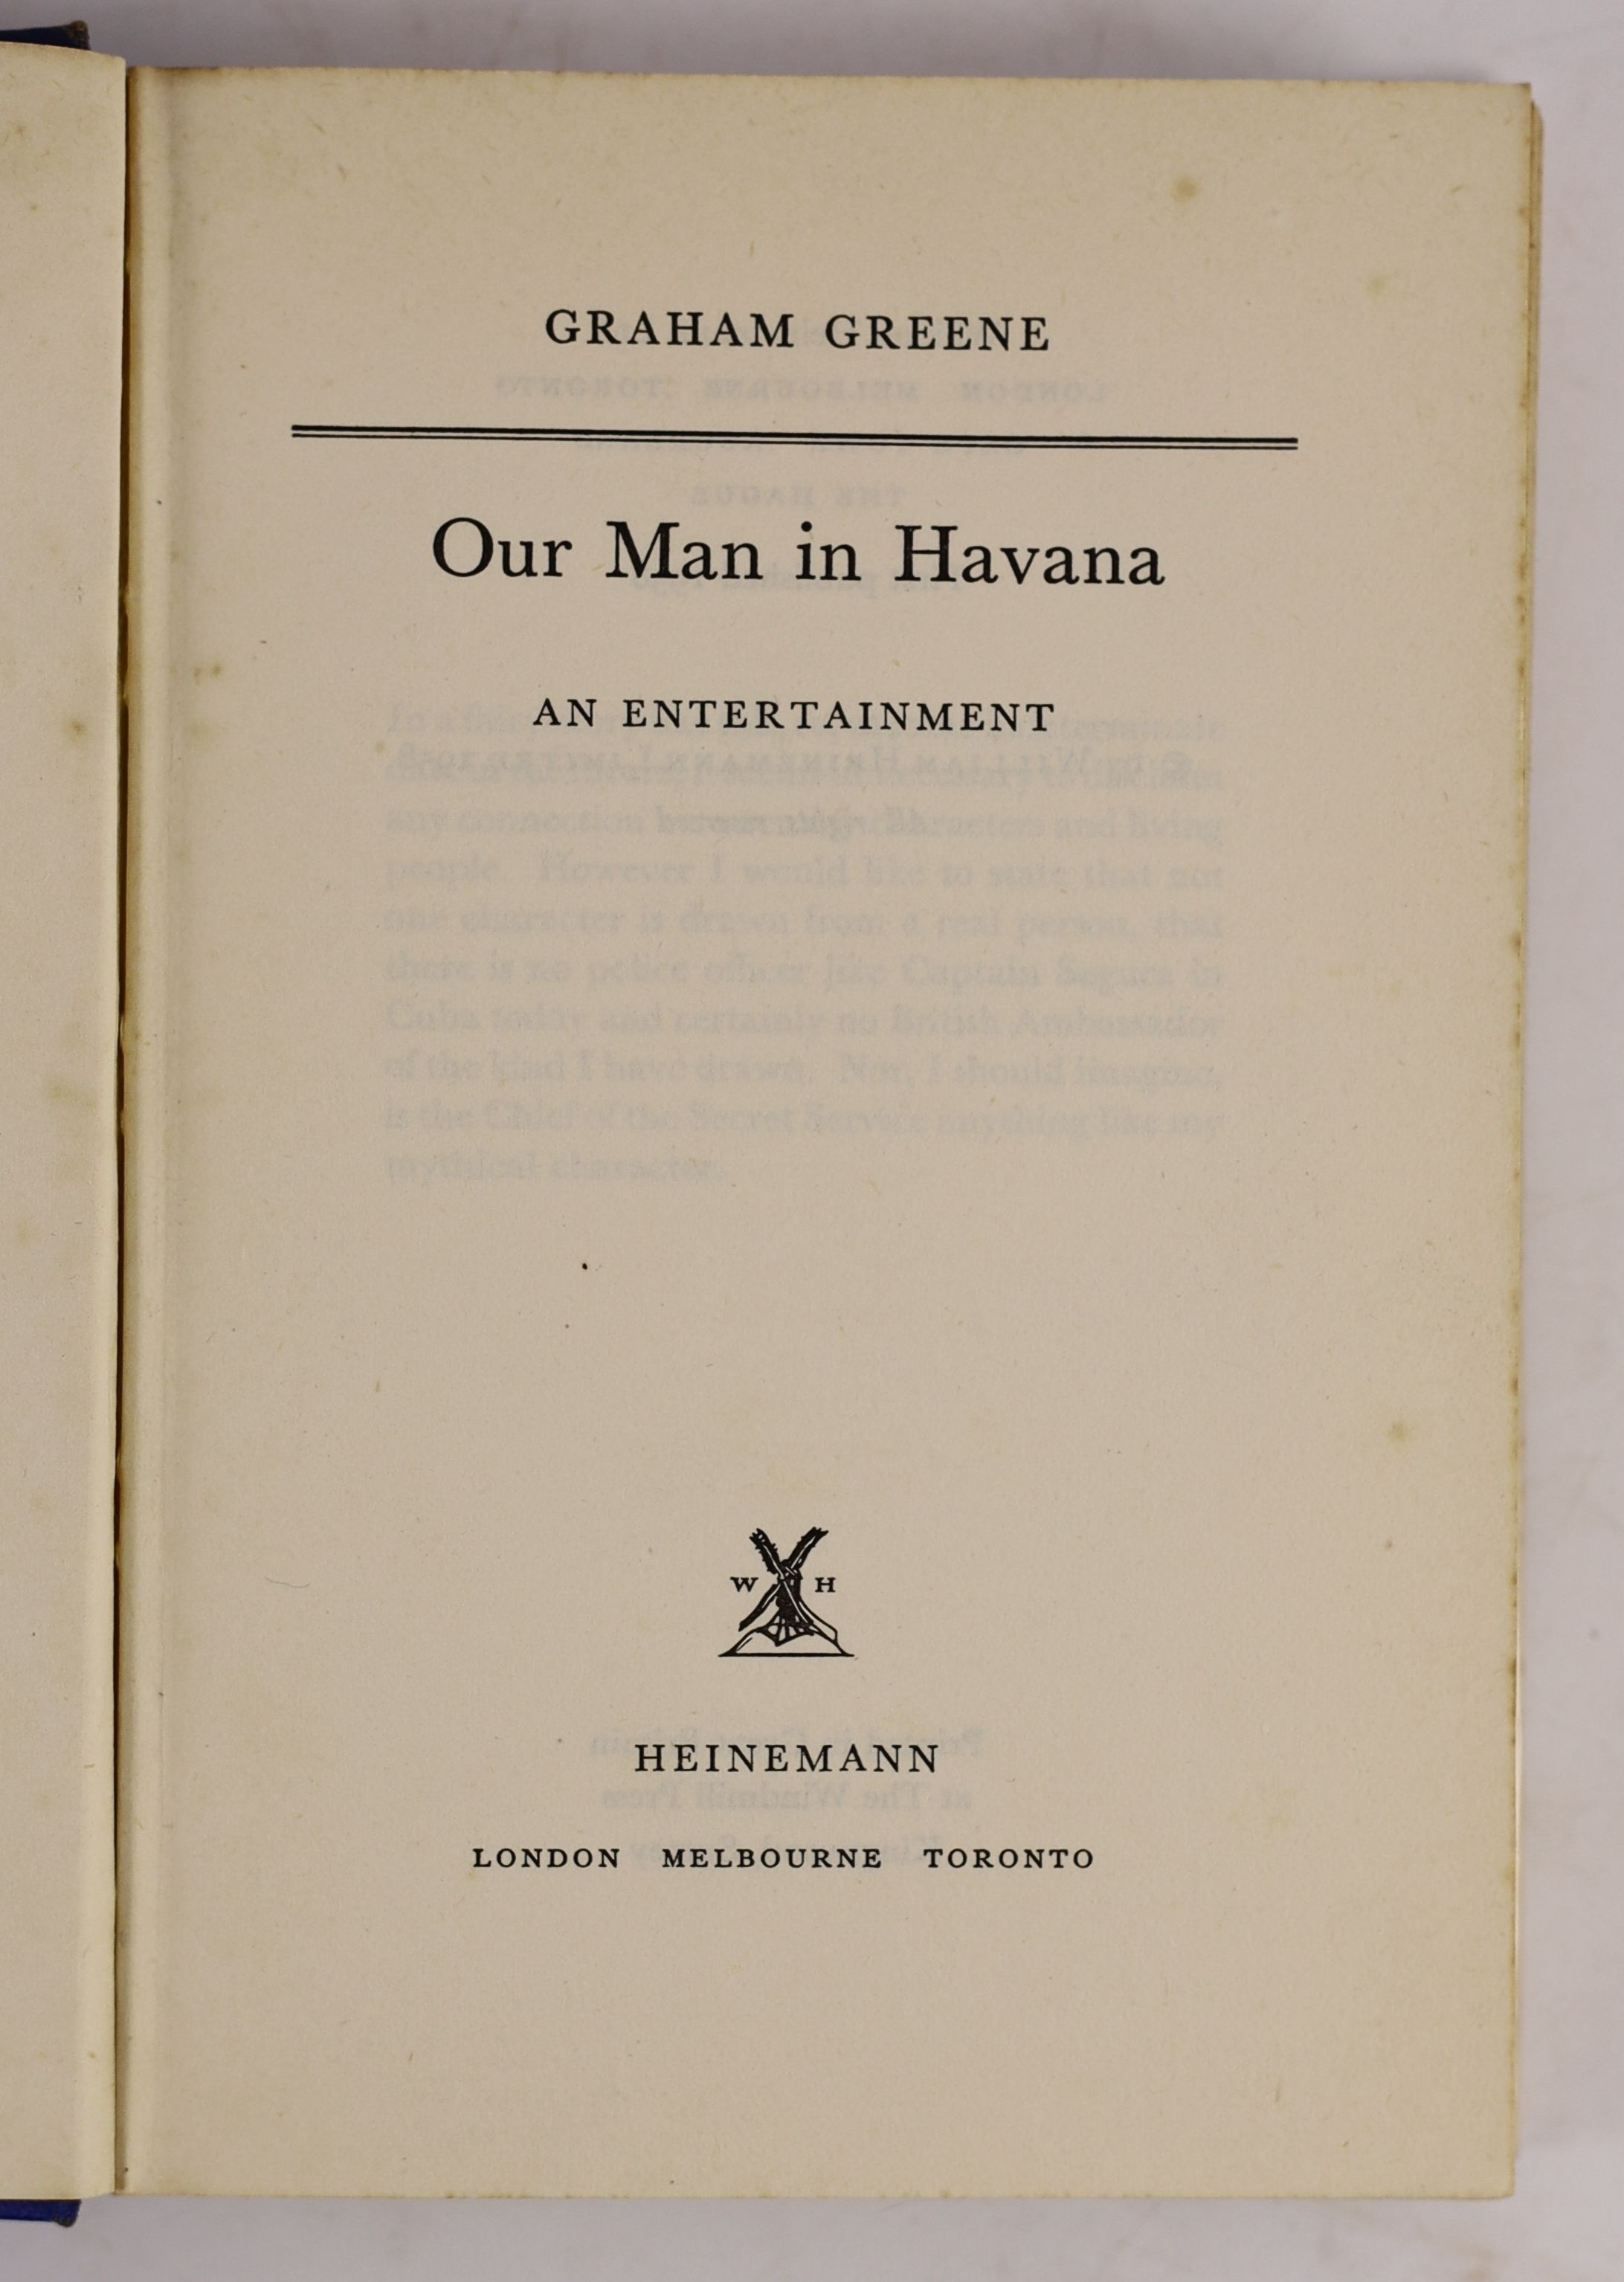 Greene, Graham - Our Man in Havana. 1st ed. original cloth with unclipped d/j. 8vo. Heinemann, London, 1958.